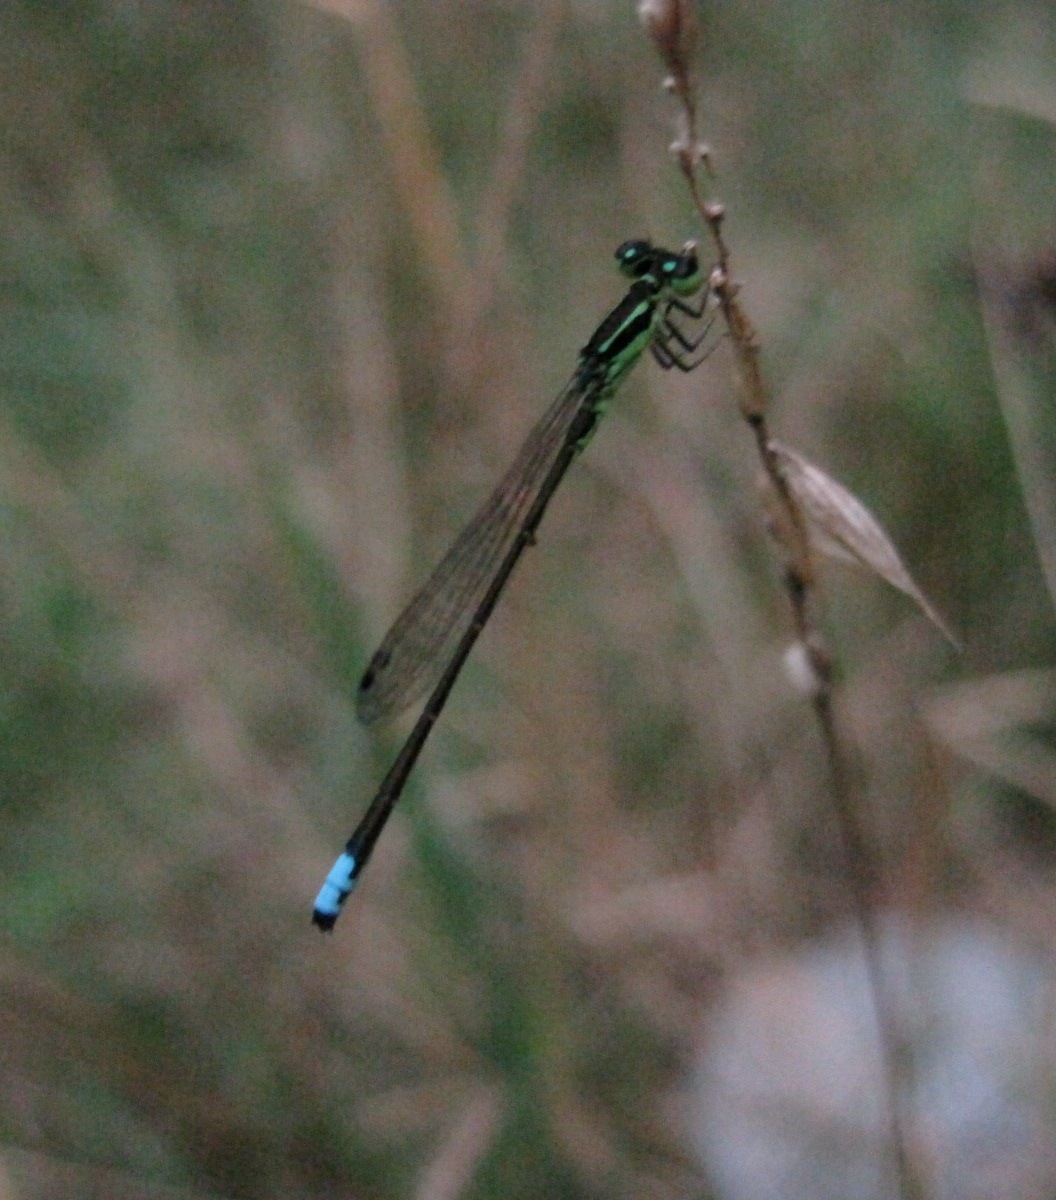 Eastern Forktail, male